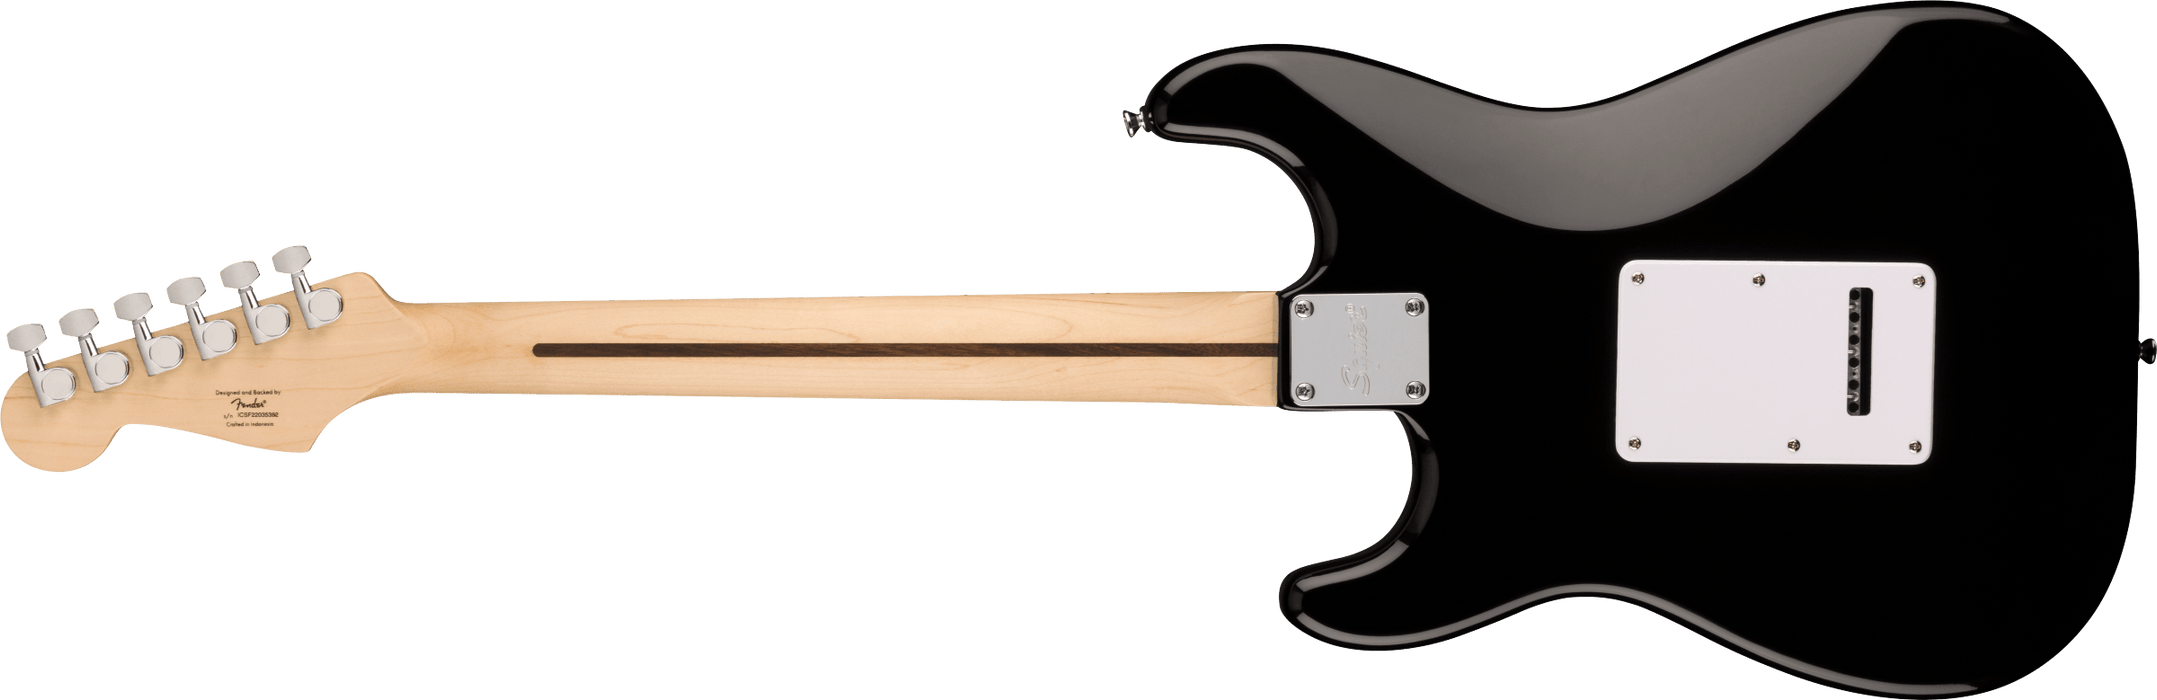 Squier Sonic Stratocaster Pack, Maple Fingerboard, Black, Gig Bag, 10G - 120V